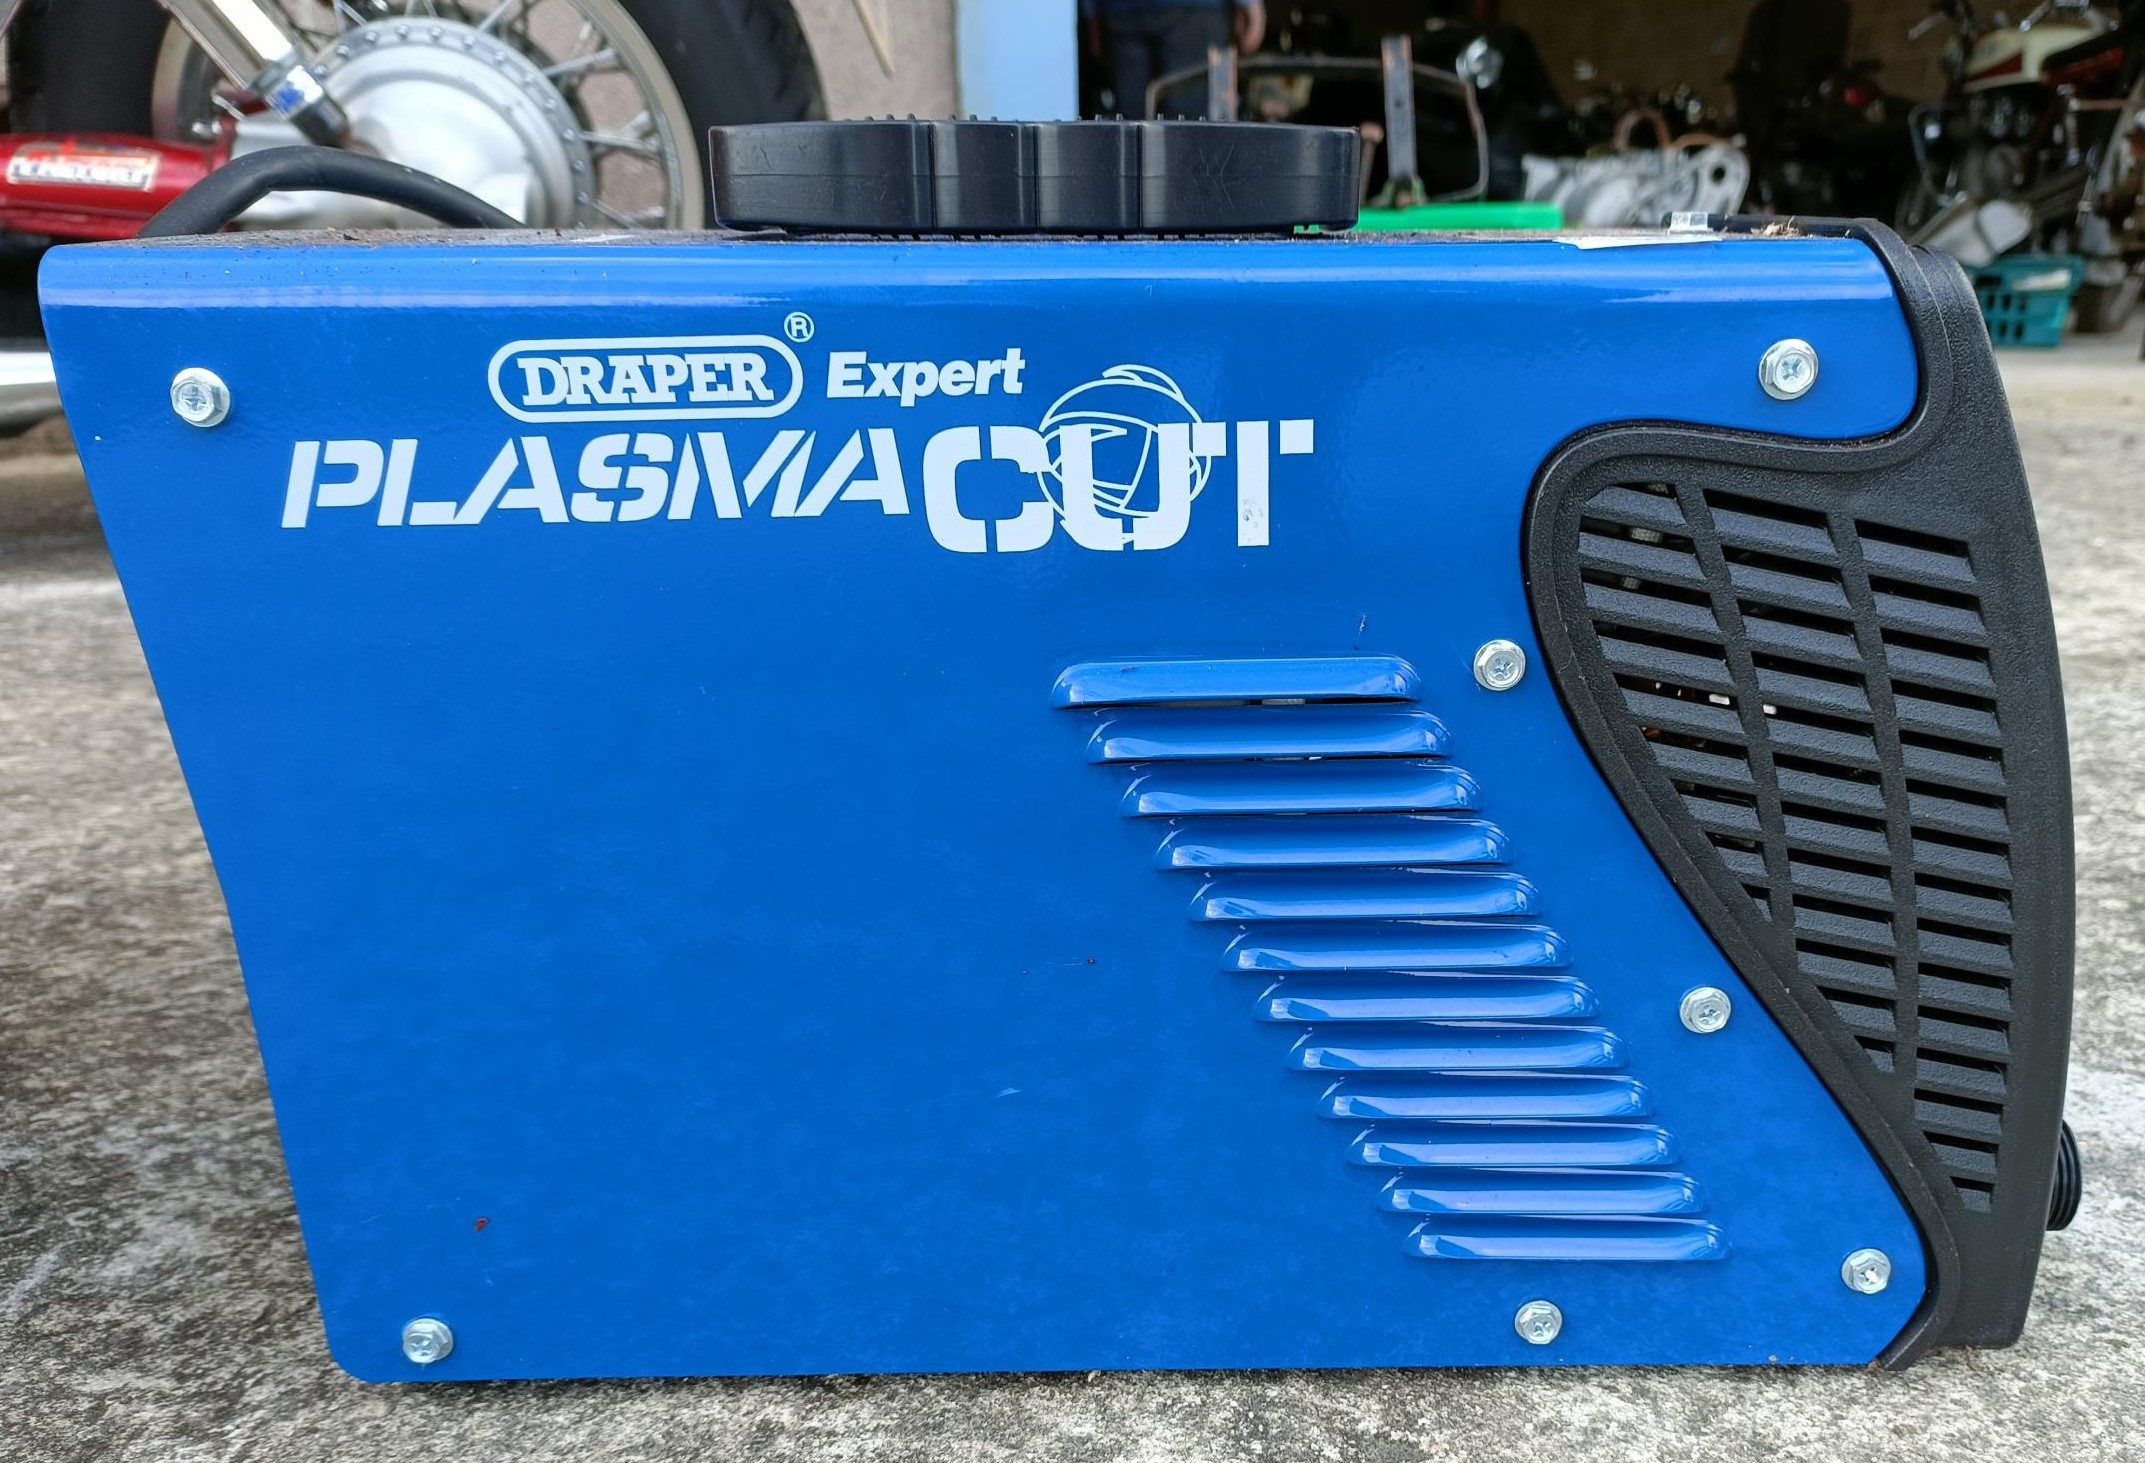 Draper Plasma cutter and accessories